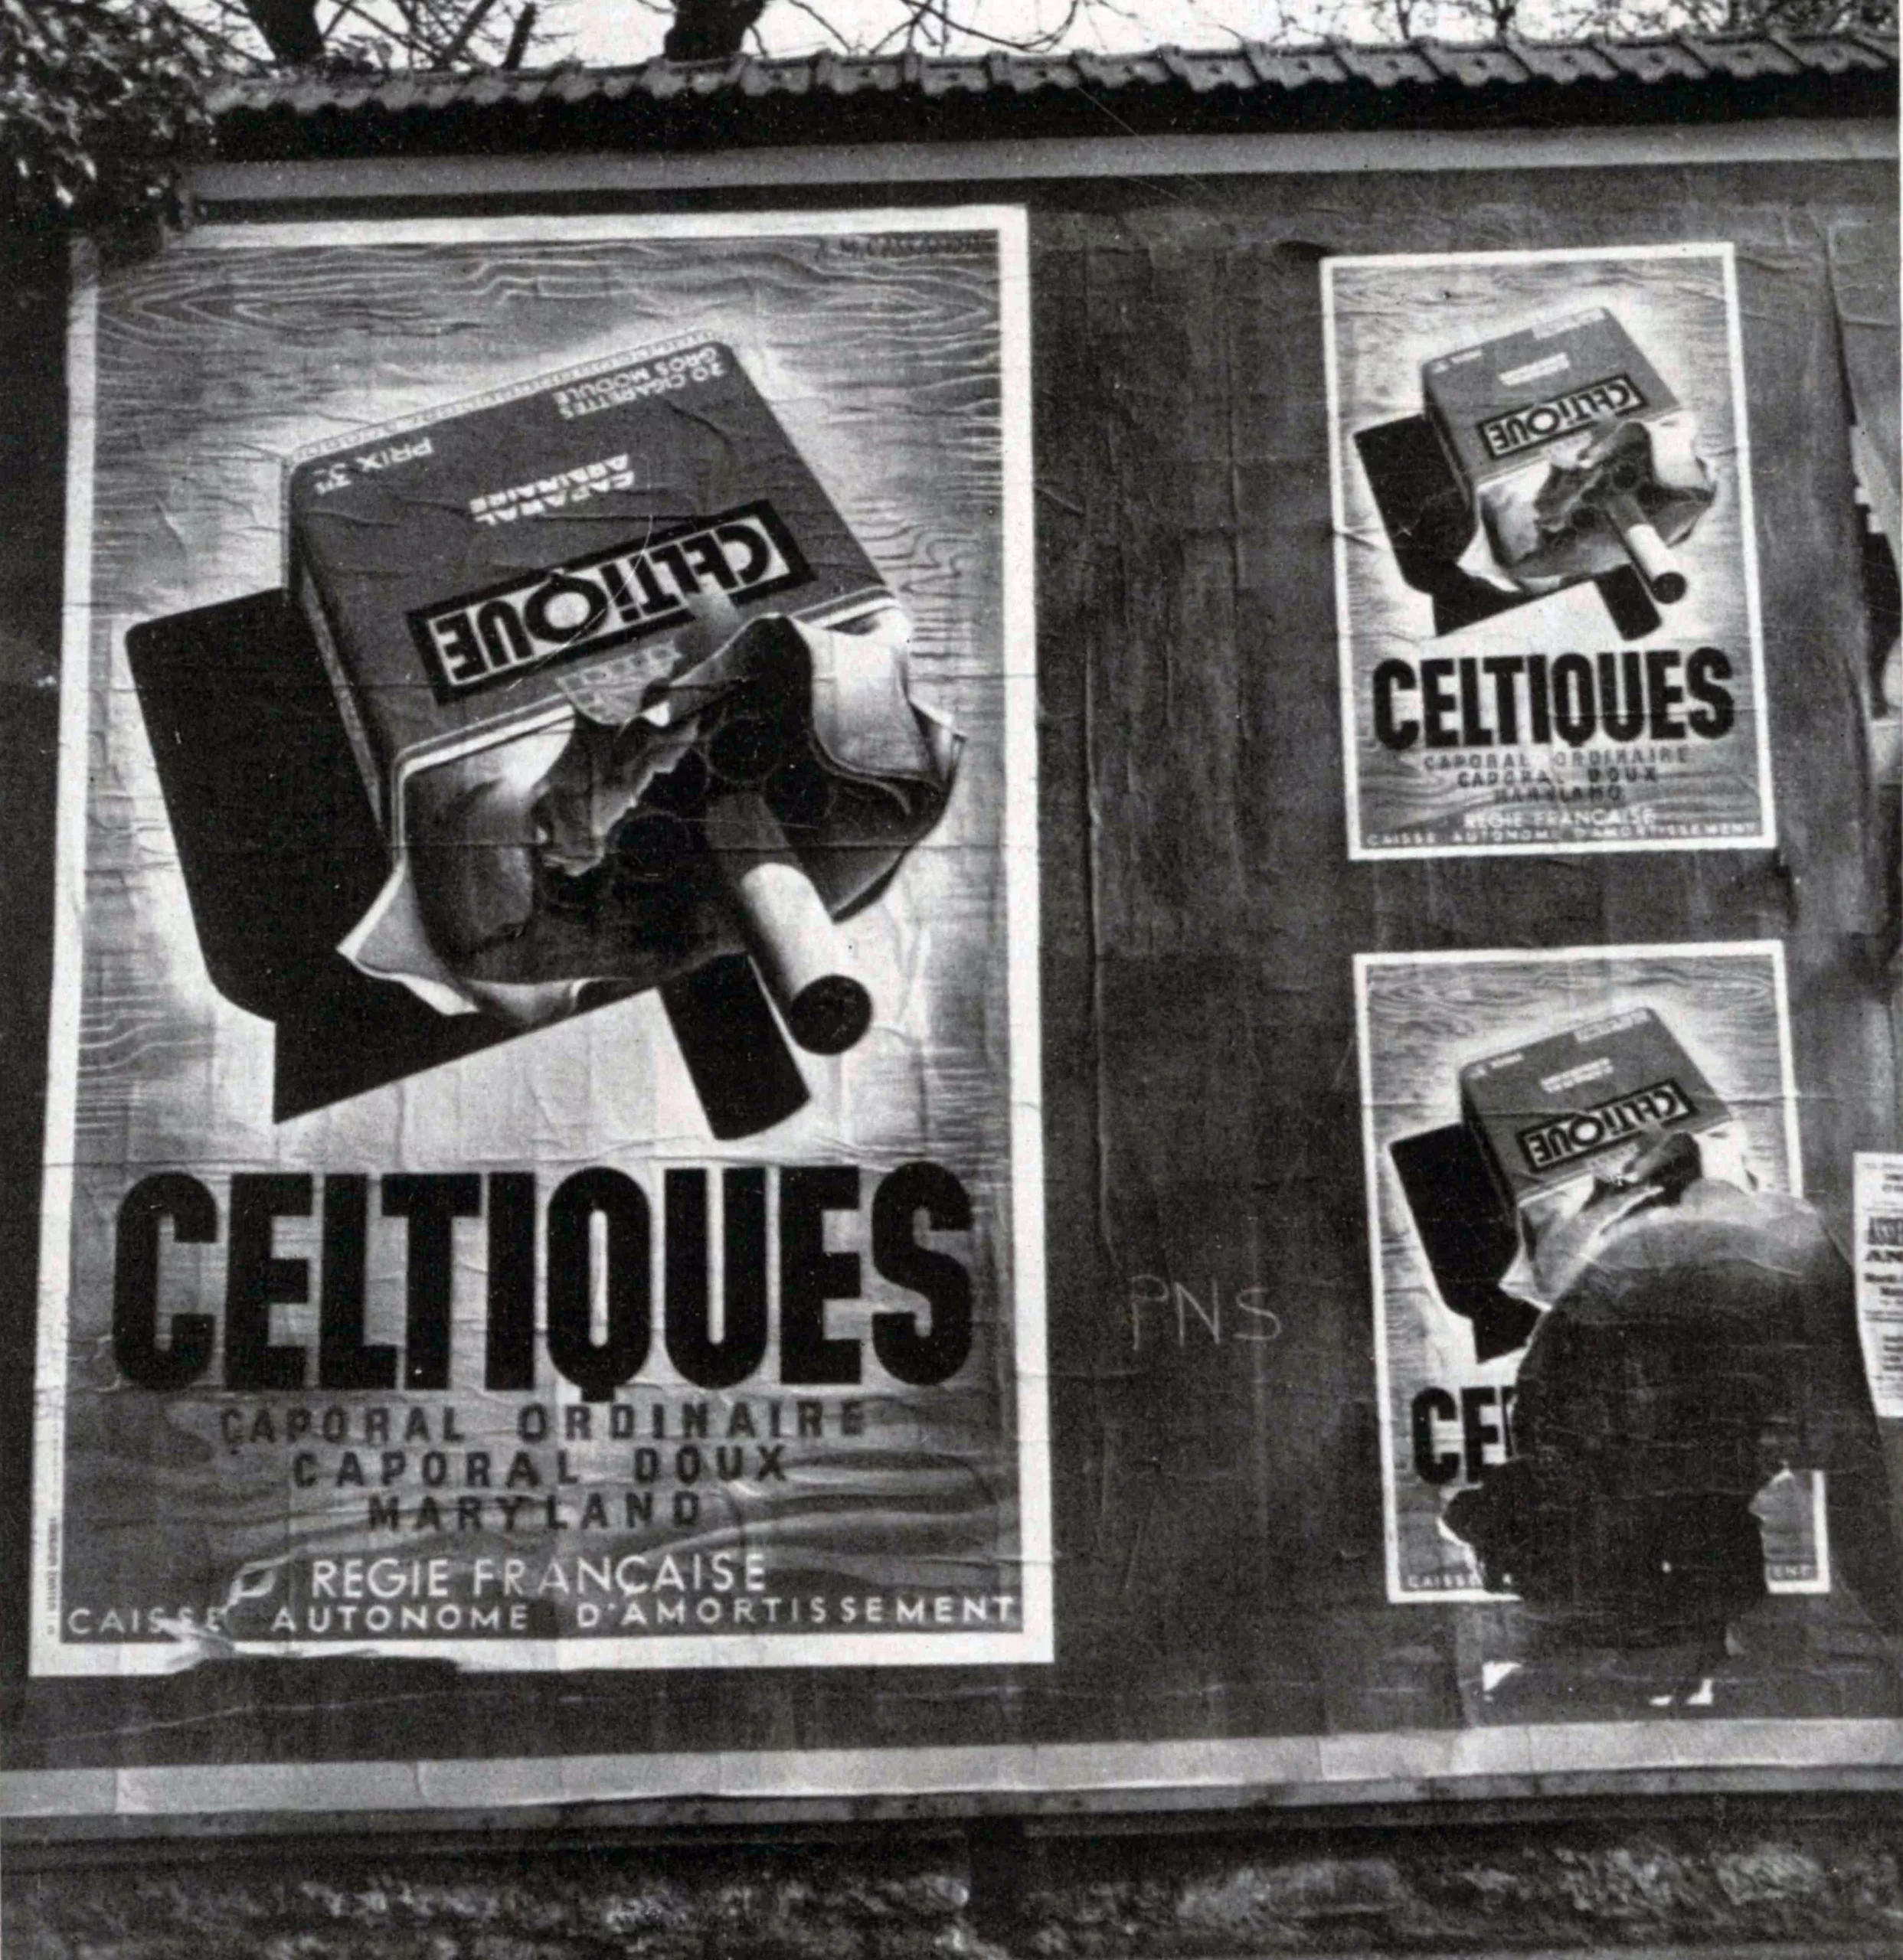 Analysis of Paris Poster Hoardings - Photograph by Maywald, Paris.